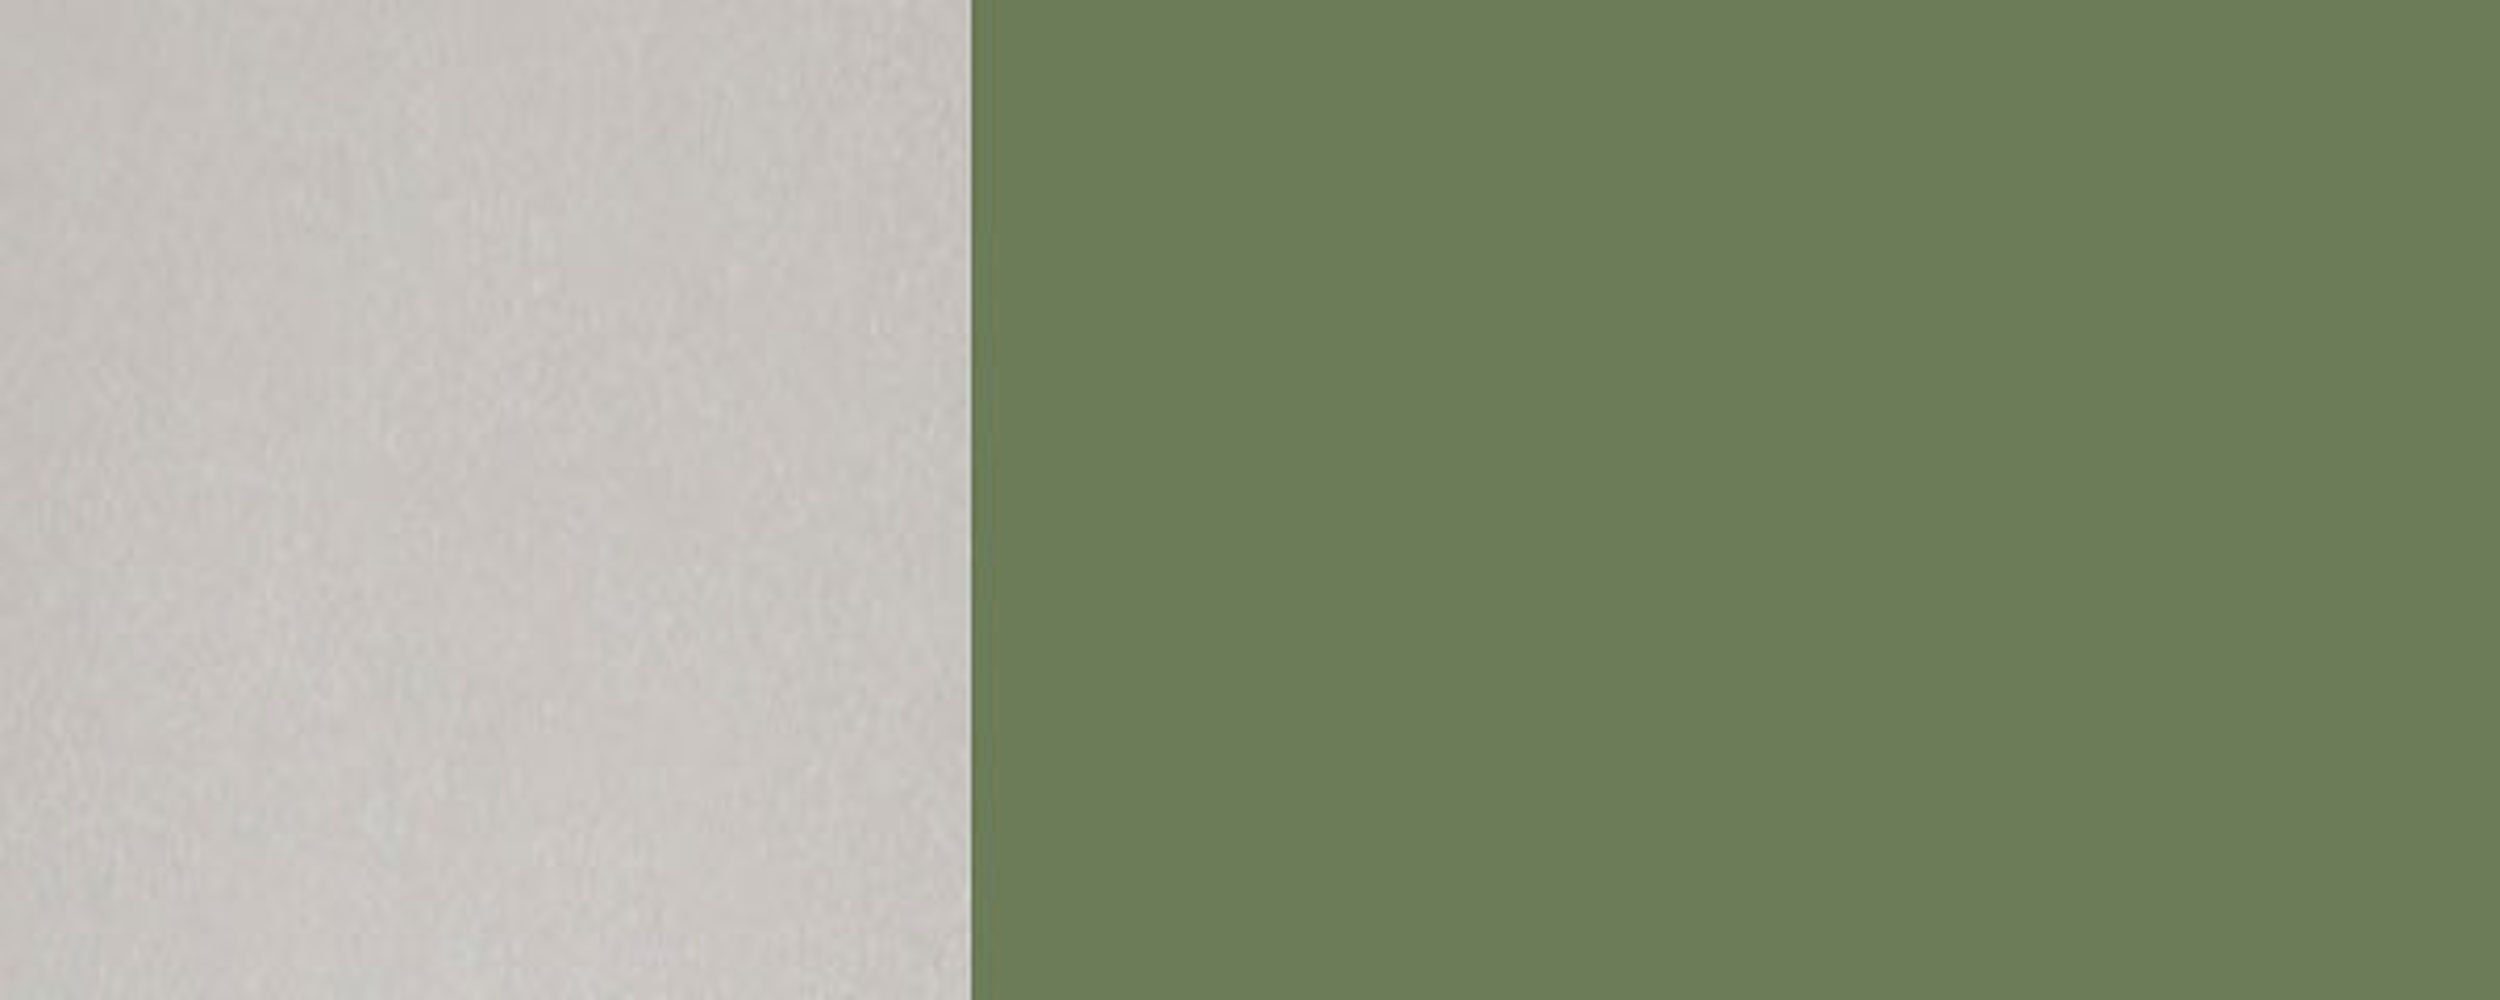 Feldmann-Wohnen Unterschrank Tivoli (Tivoli) 6011 Front- resedagrün und matt (Teilauszug) RAL Schubladen mit wählbar Korpusfarbe 2 120cm